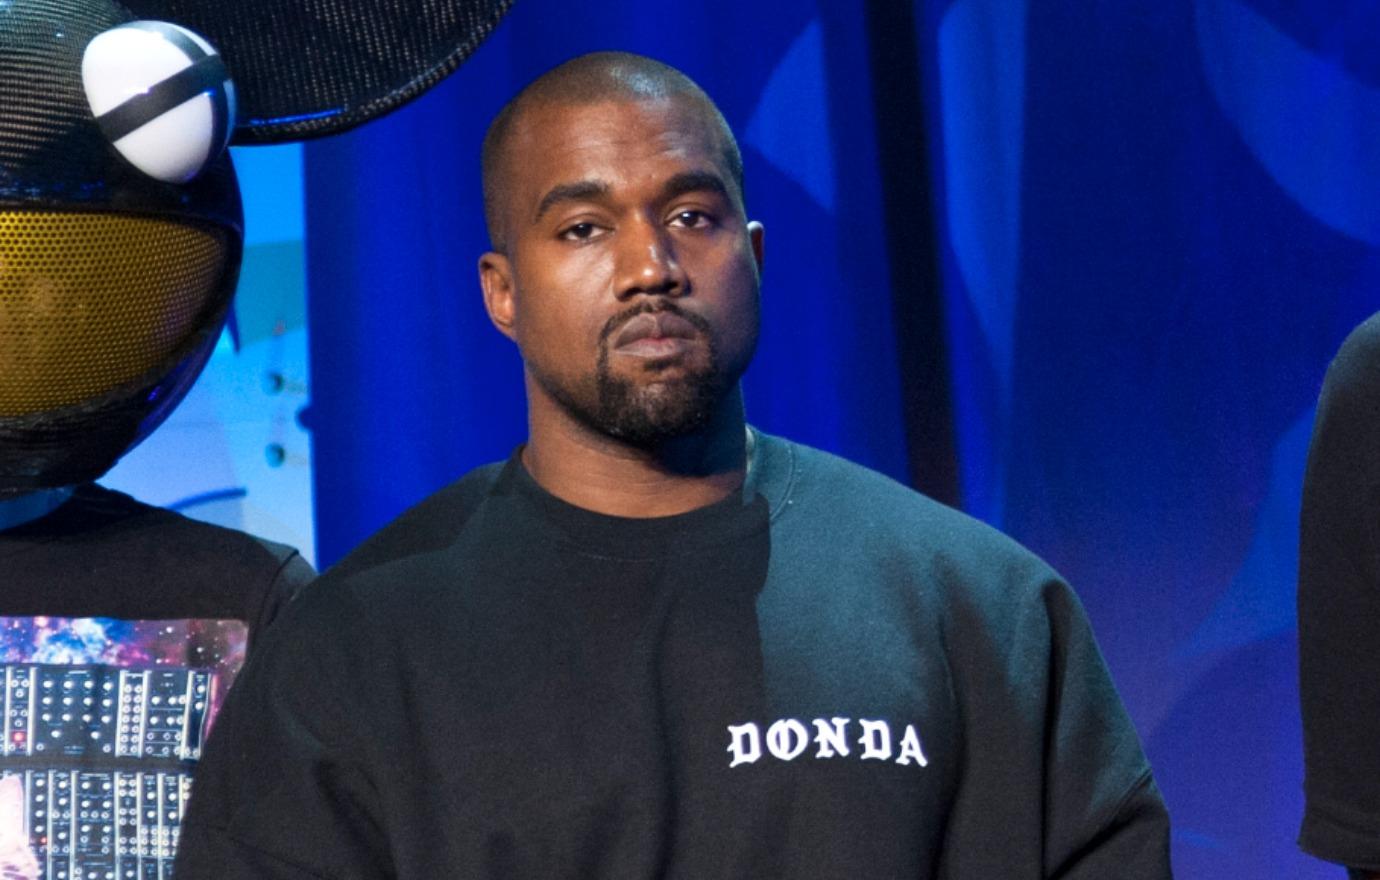 Donda Lawsuit Claims Kanye West Only Let Academy Students Eat Sushi